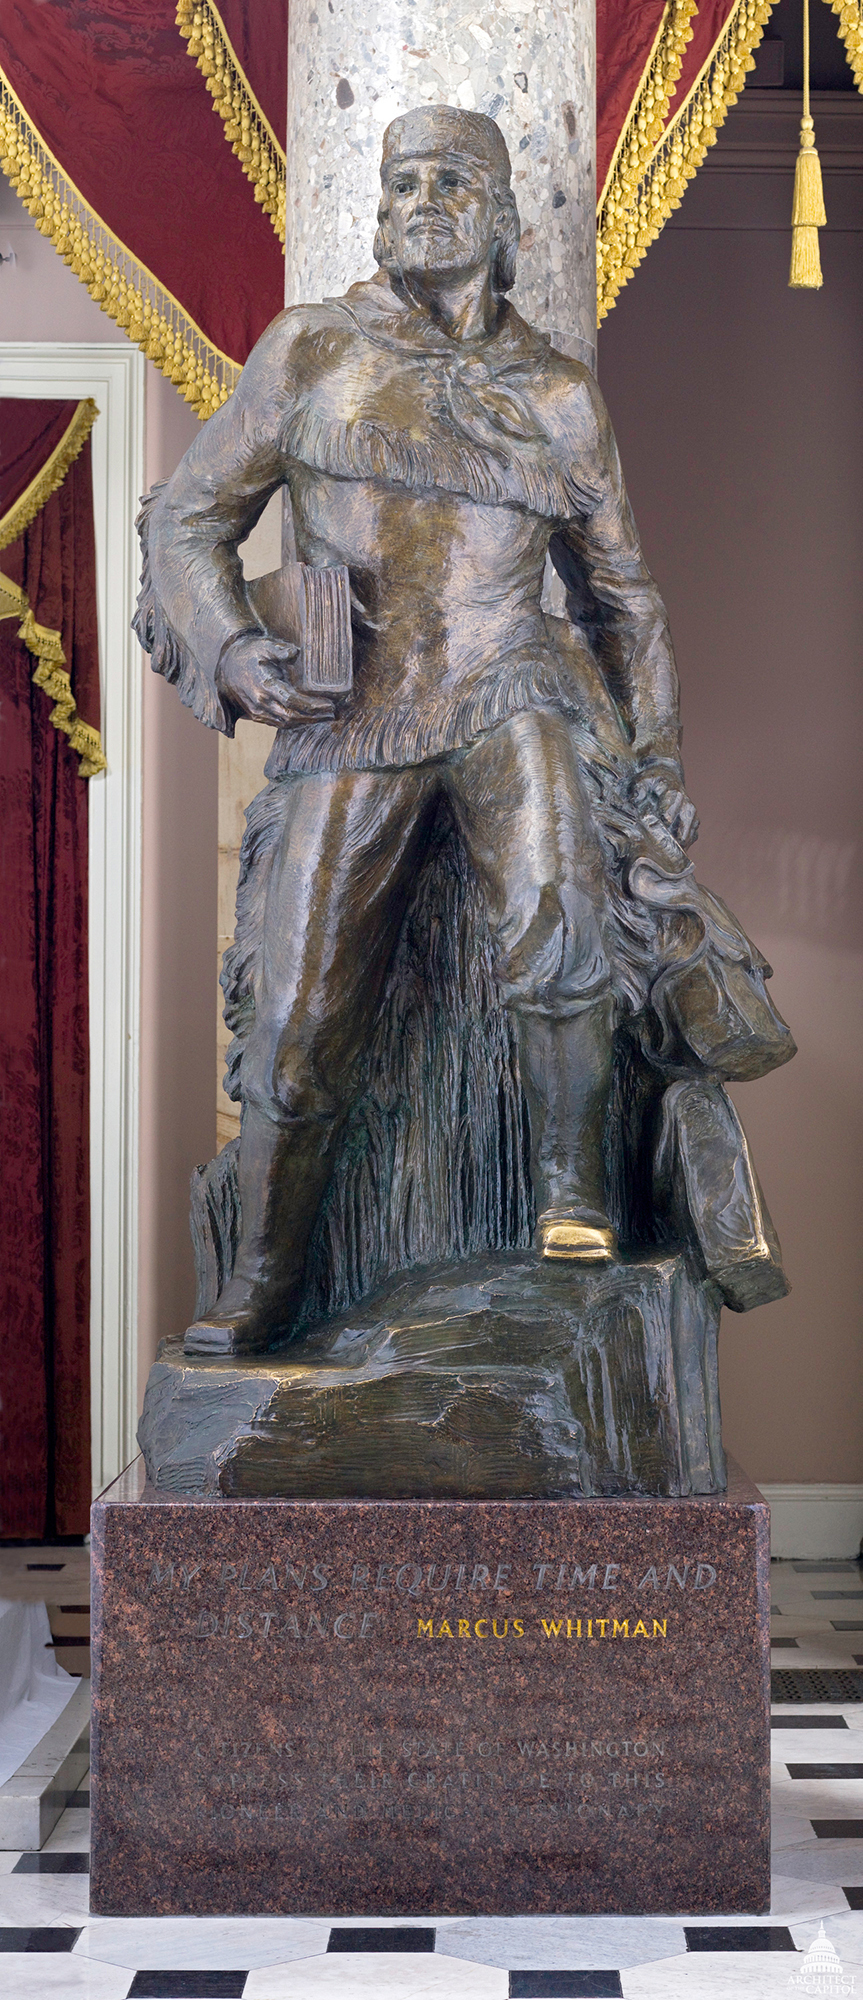 Marcus Whitman statue